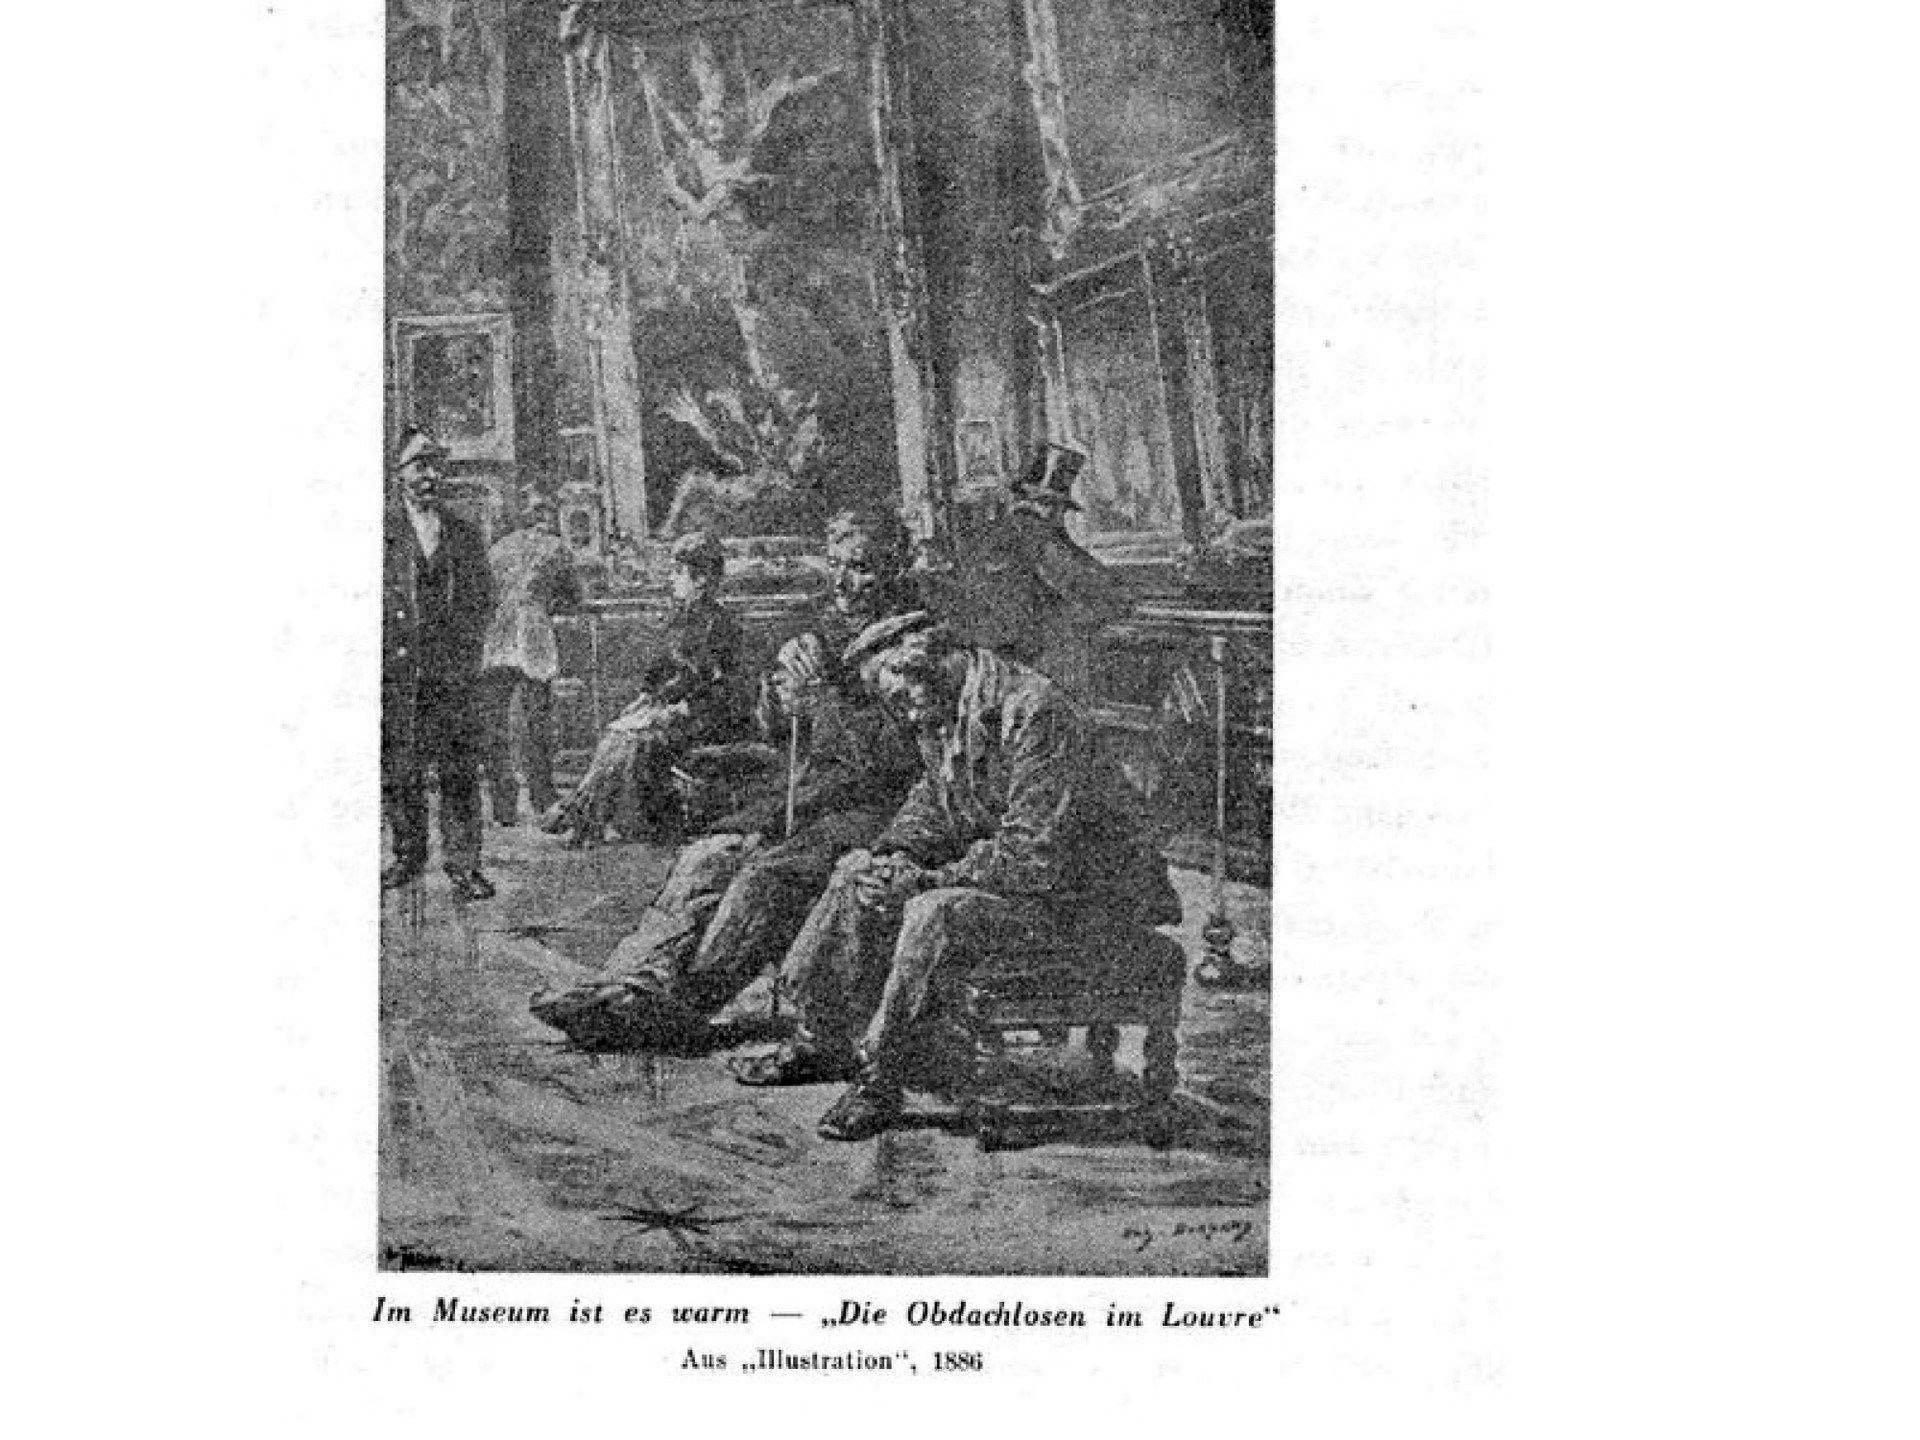 Die Obdachlose im Louvre, 1886, Illustration